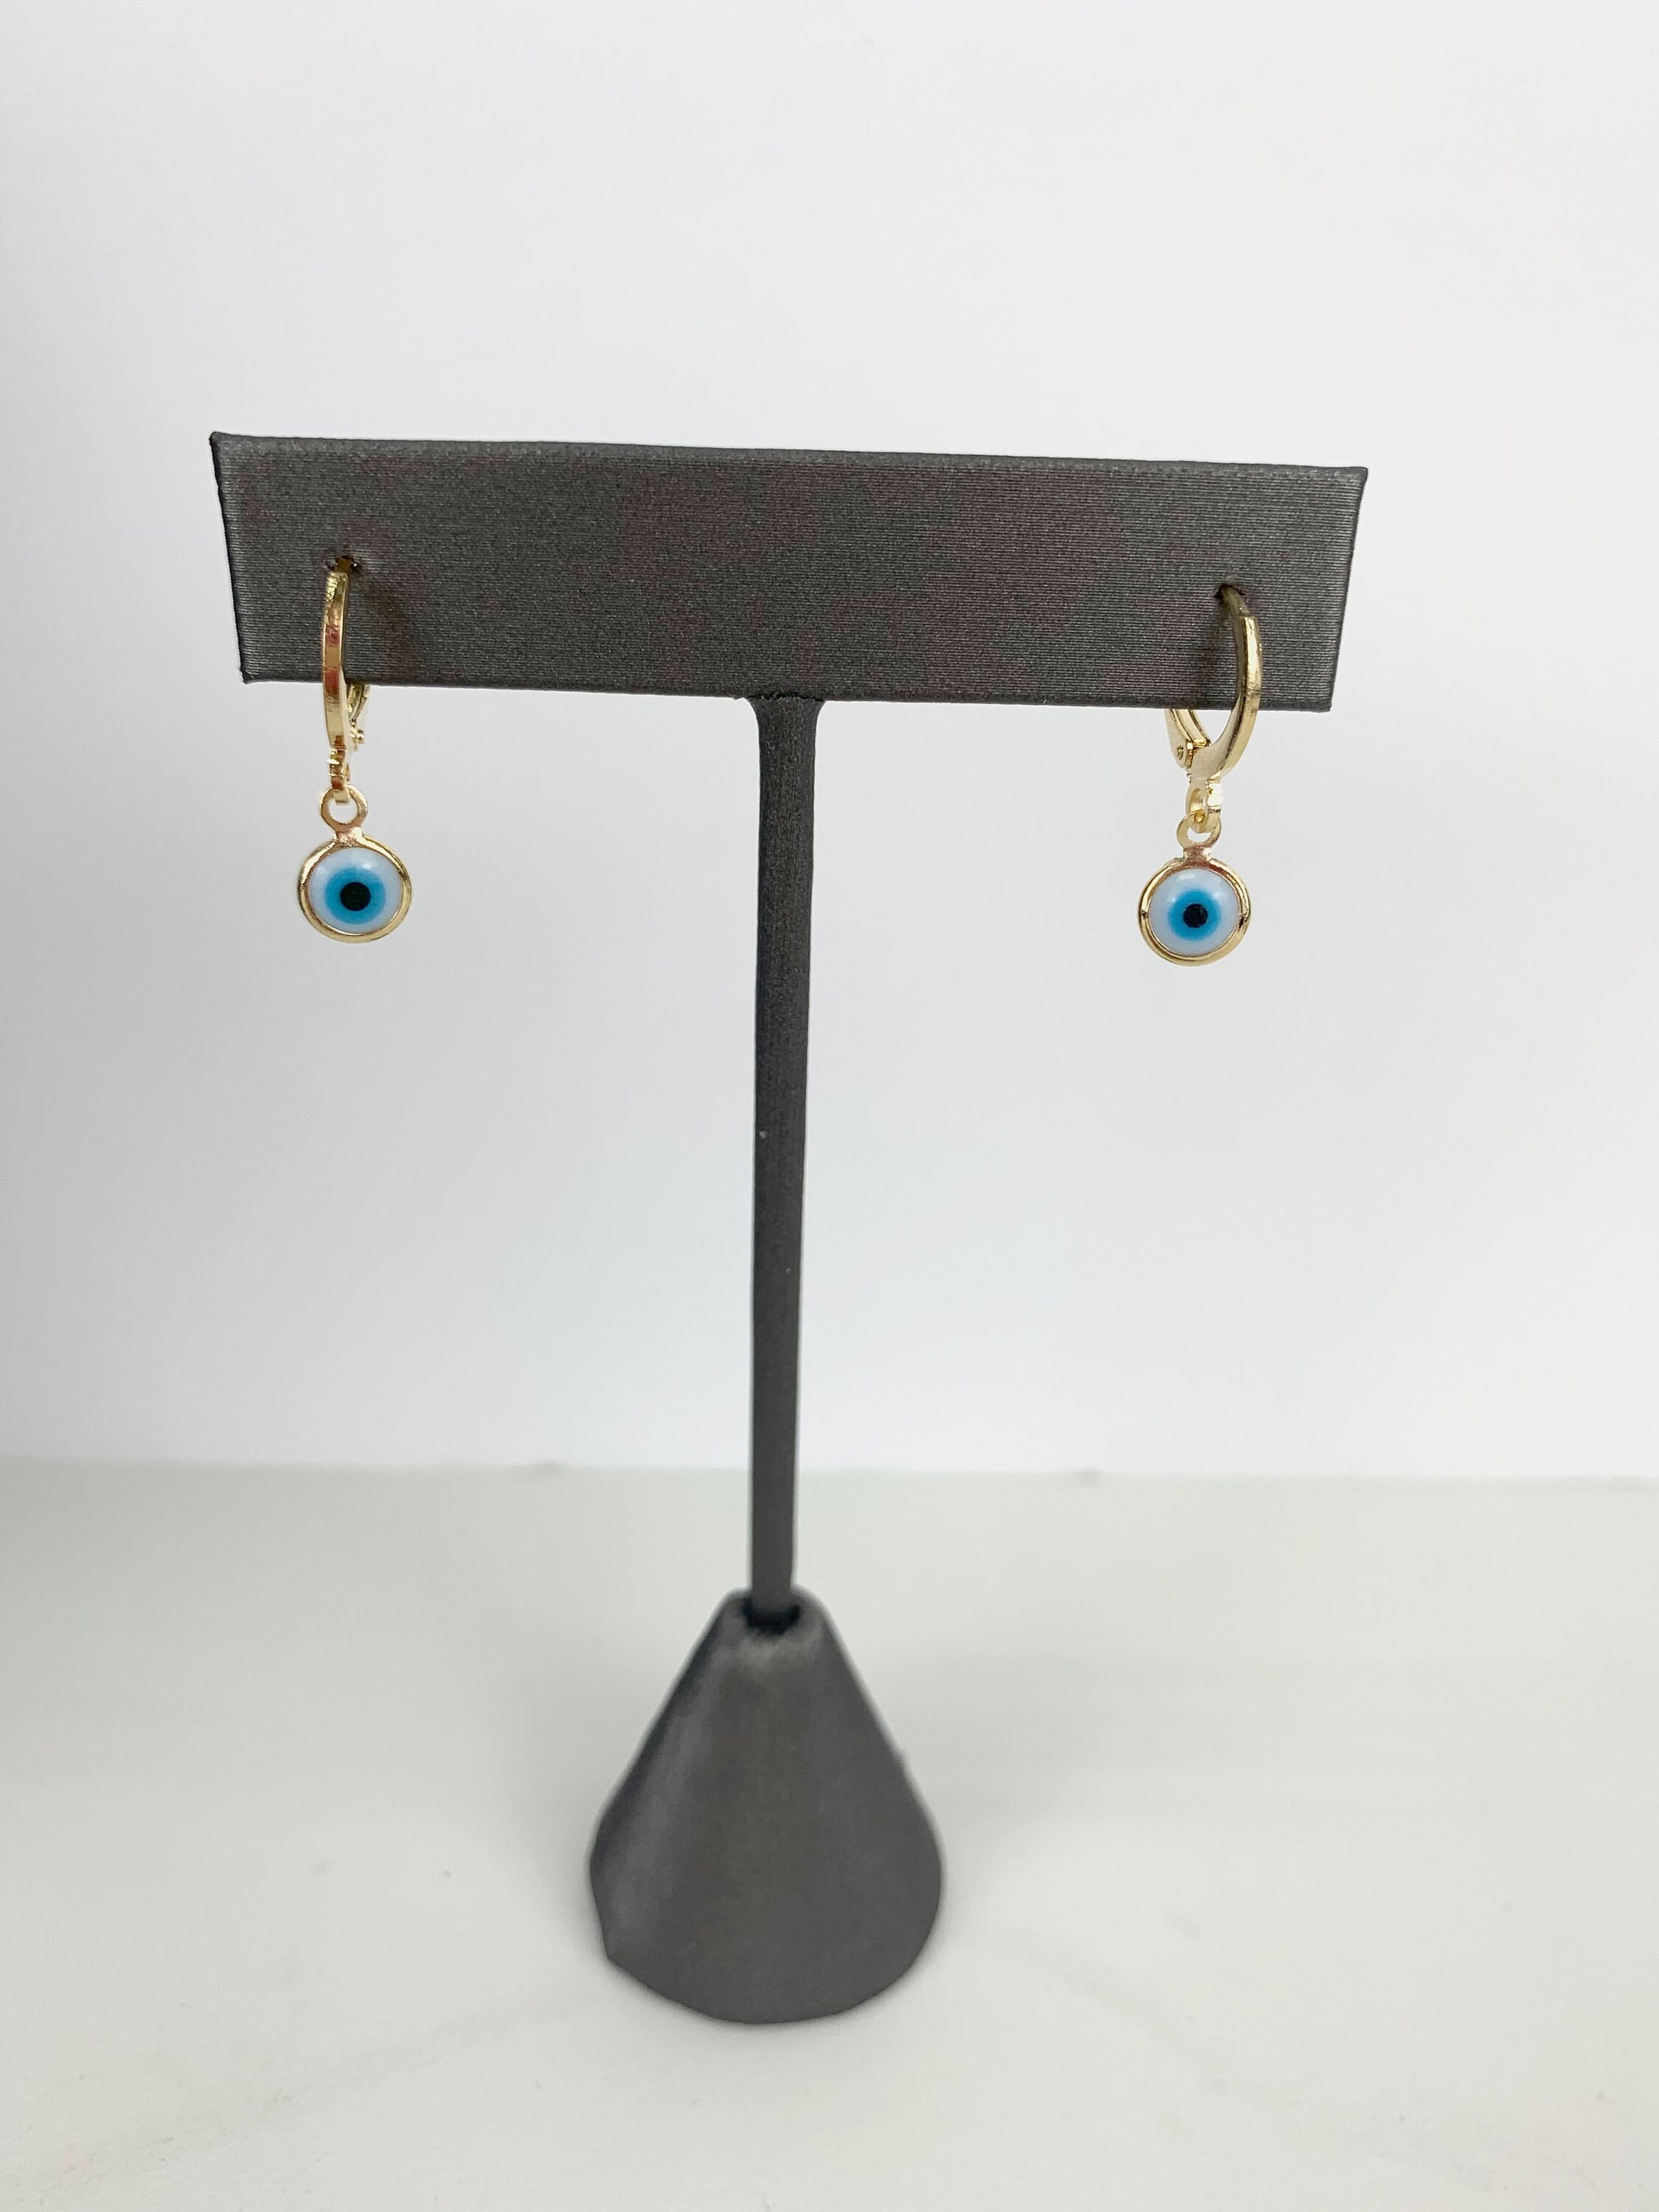 18k Gold Filled Fancy Necklace or Anklet or  Earrings or Bracelet Geek Eyes Set Wholesale Jewelry Supplies